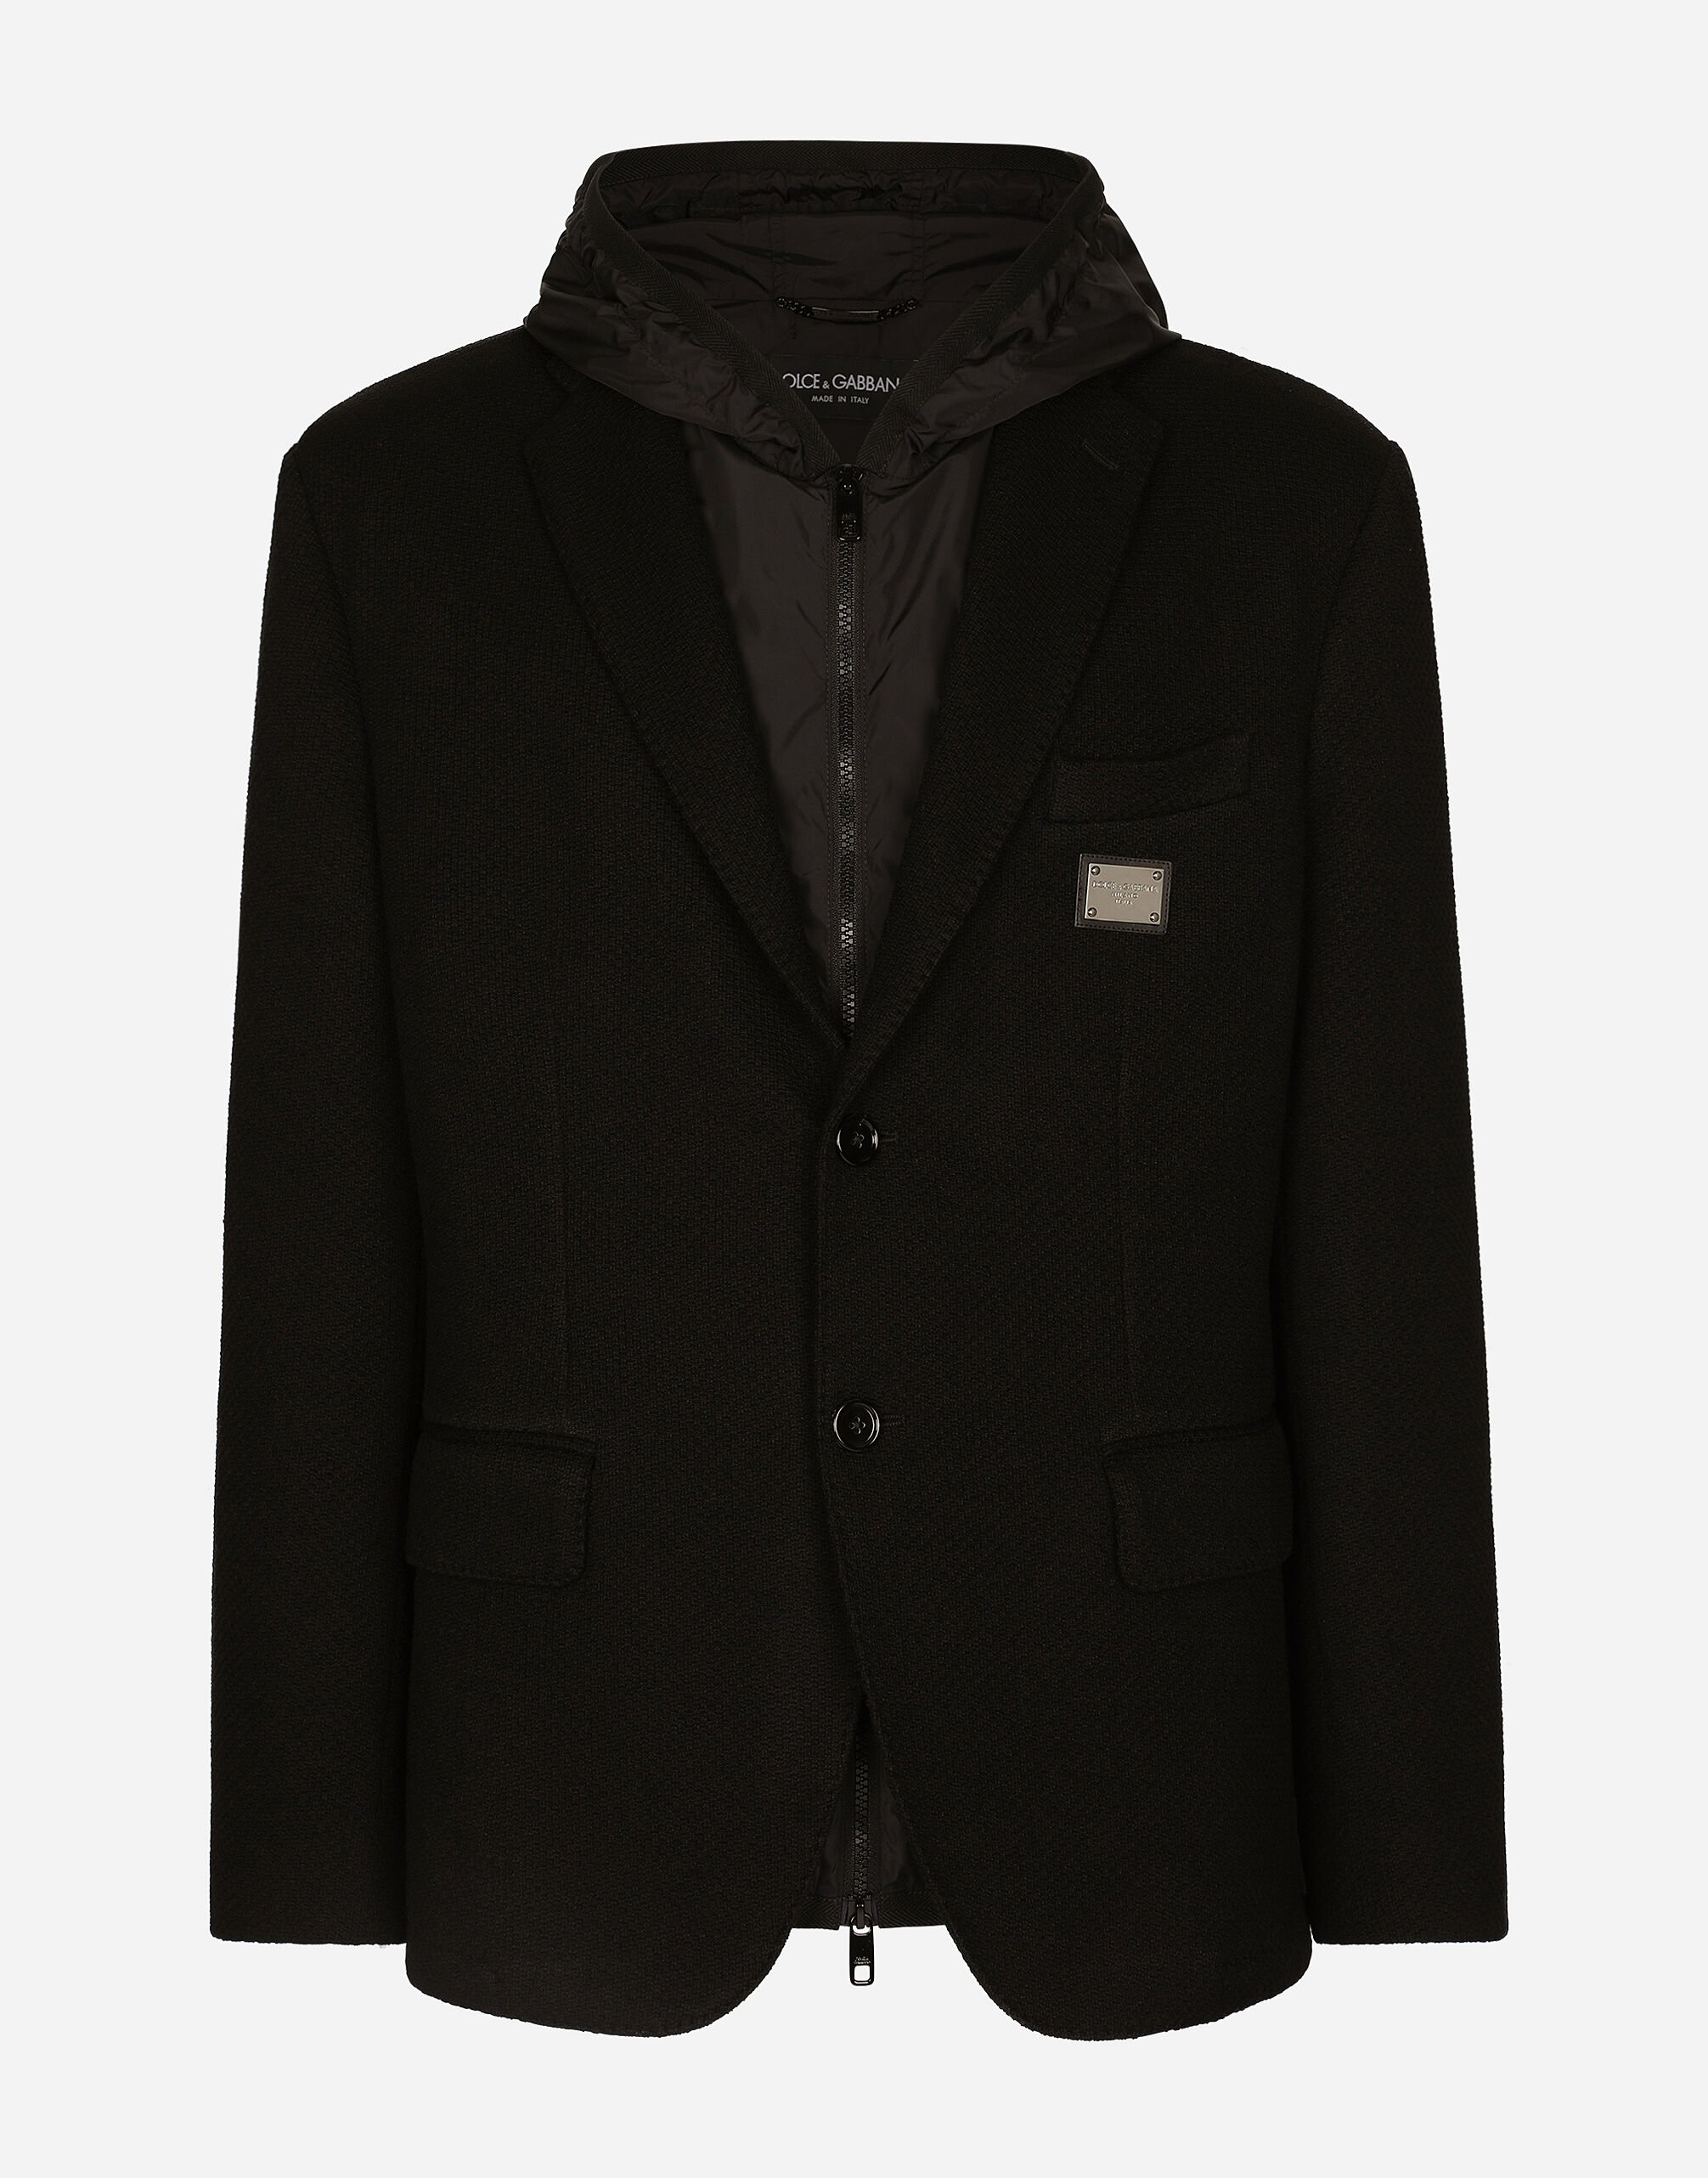 Dolce & Gabbana Hooded jersey jacket and nylon vest Black GW5OHTFUFMF